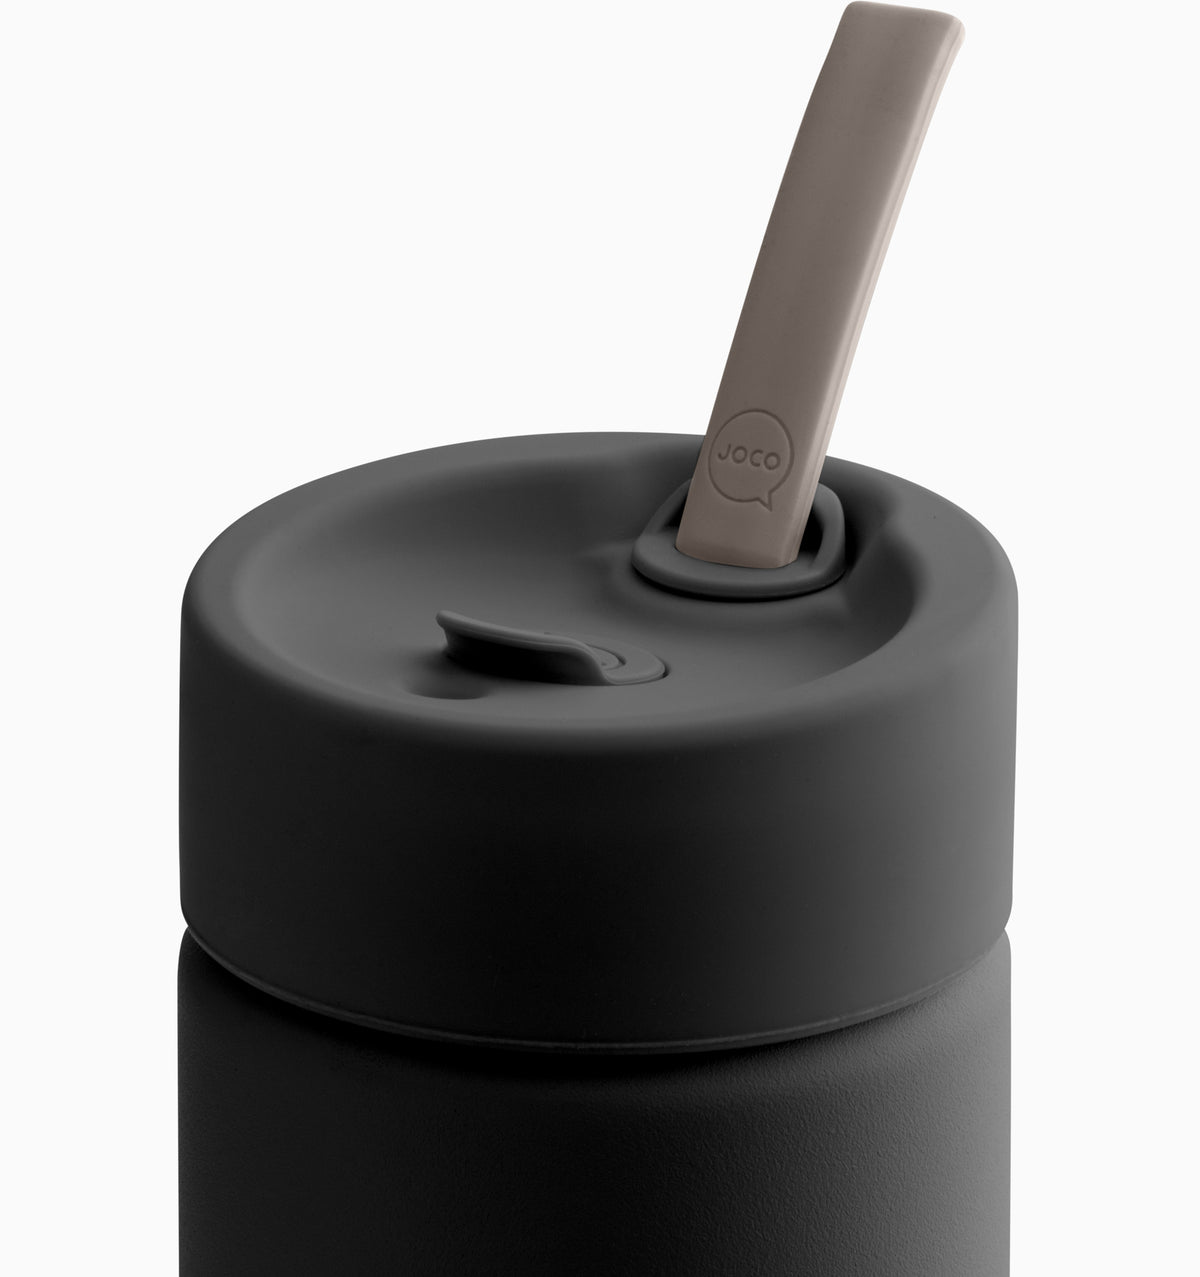 Joco 354ml (12oz) Active Flask Insulated - Ultra Black